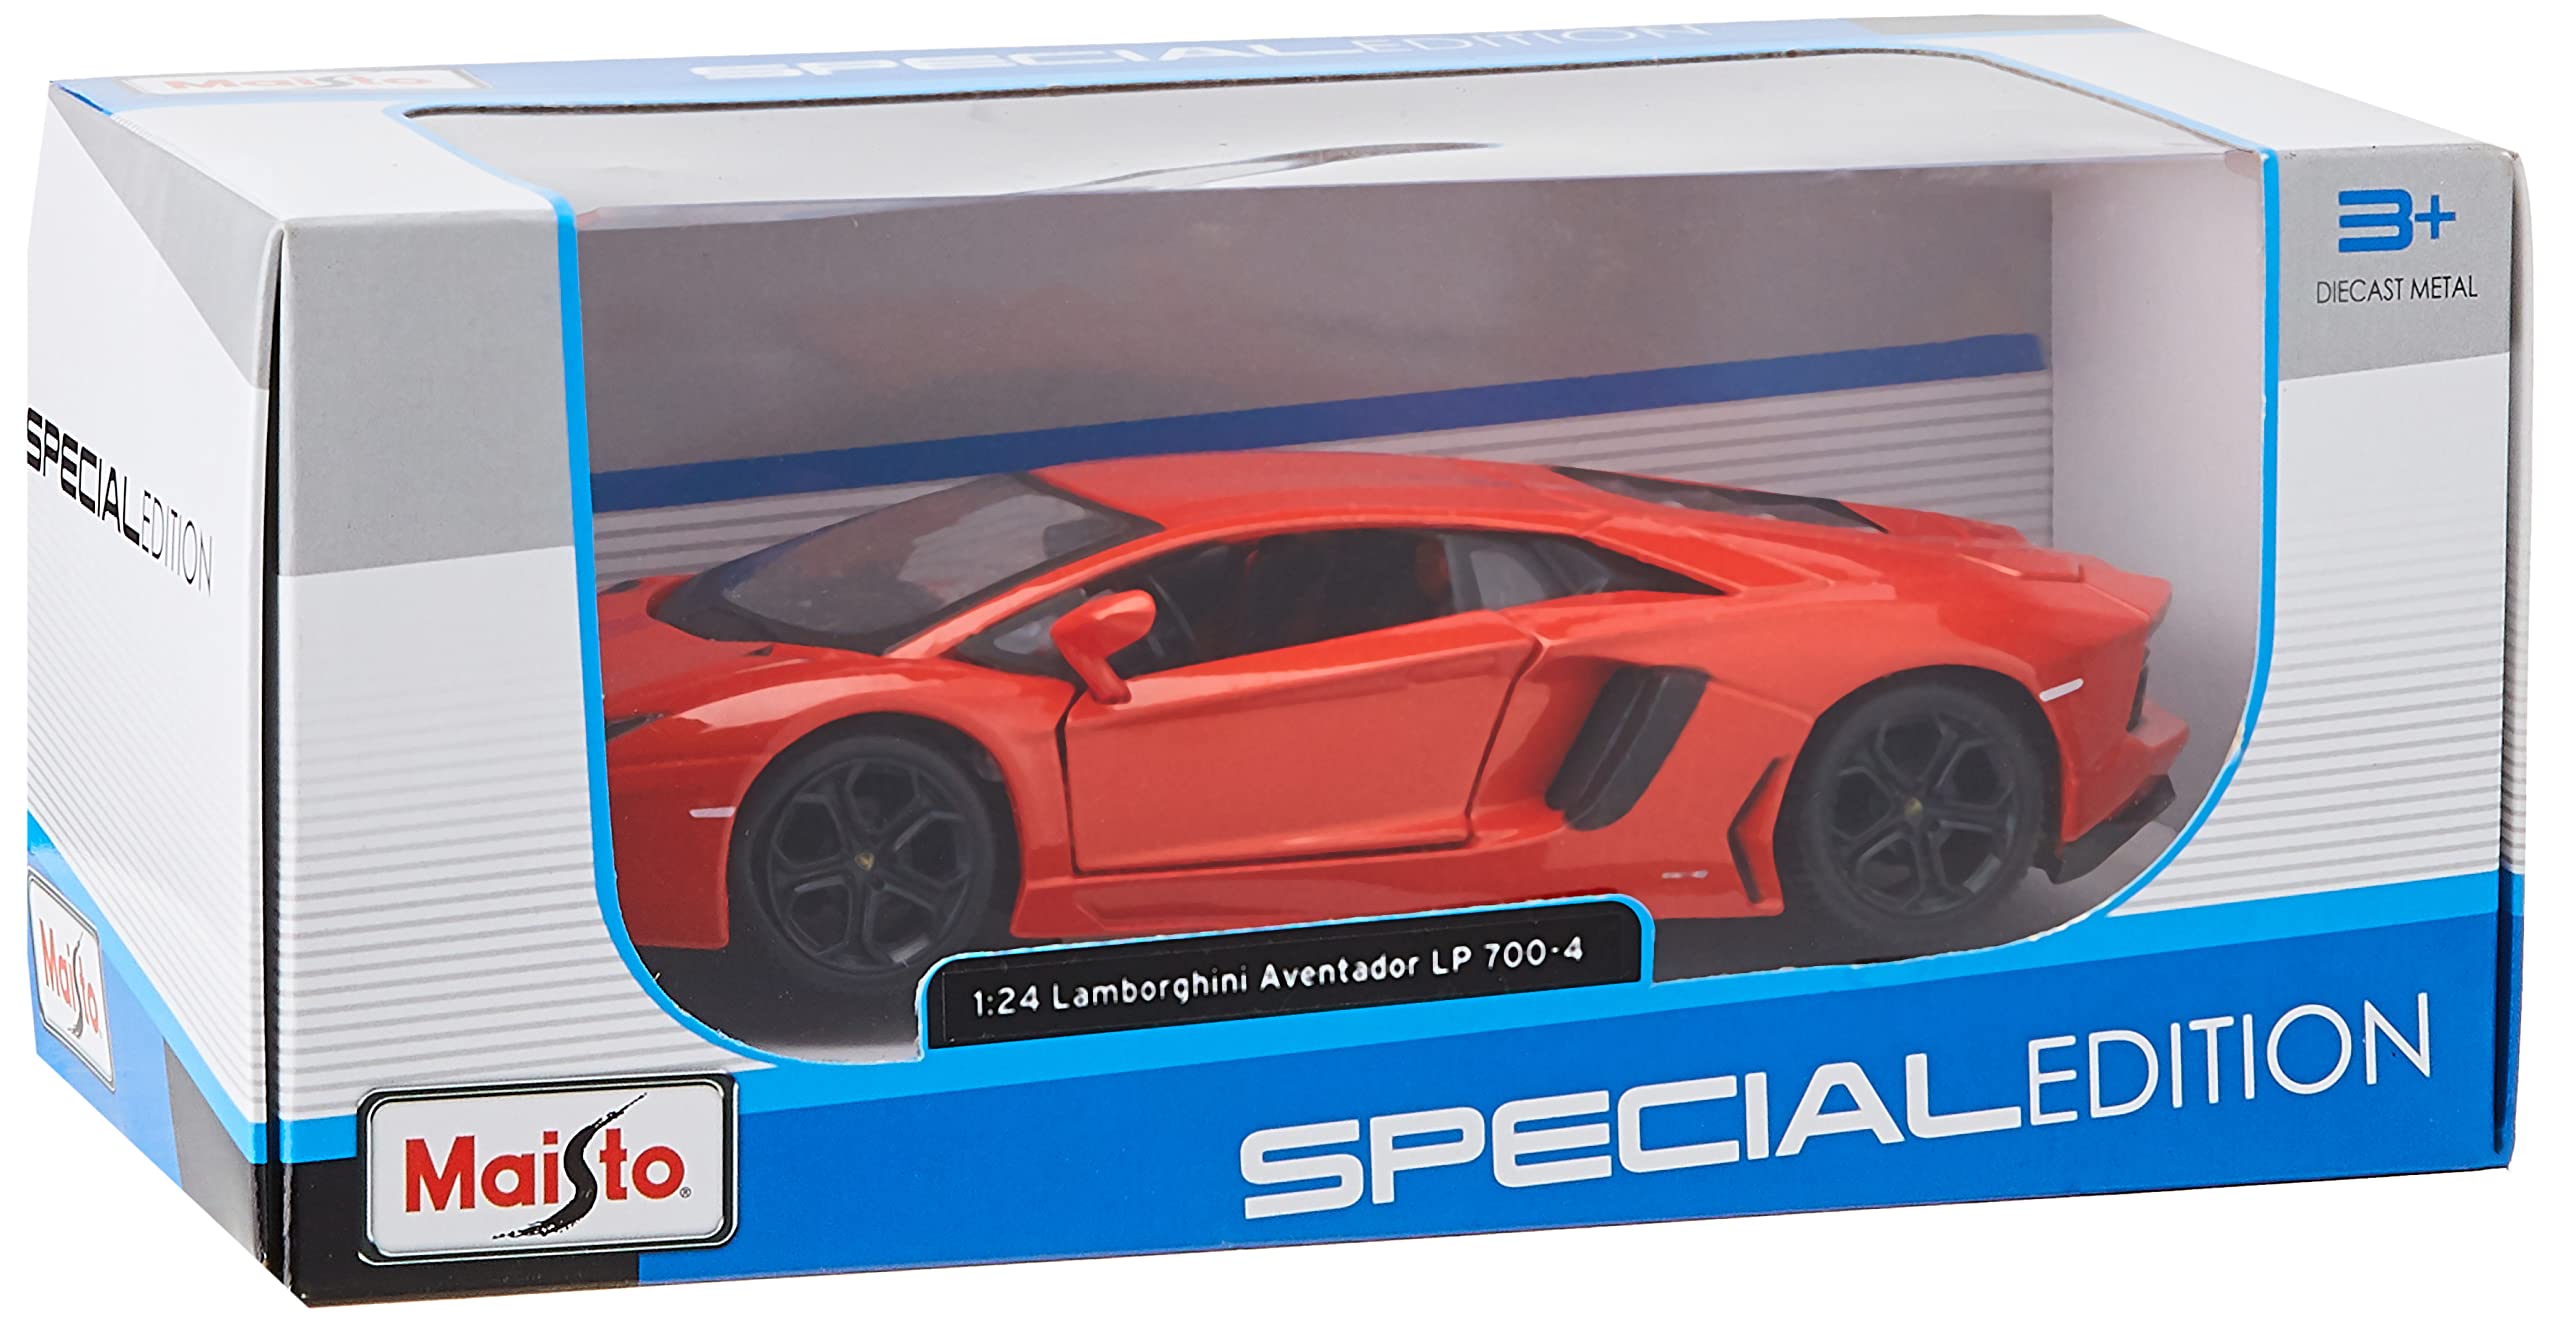 Maisto-1:24 Special Edition Lamborghini Aventador LP 700-4-31210-Legacy Toys